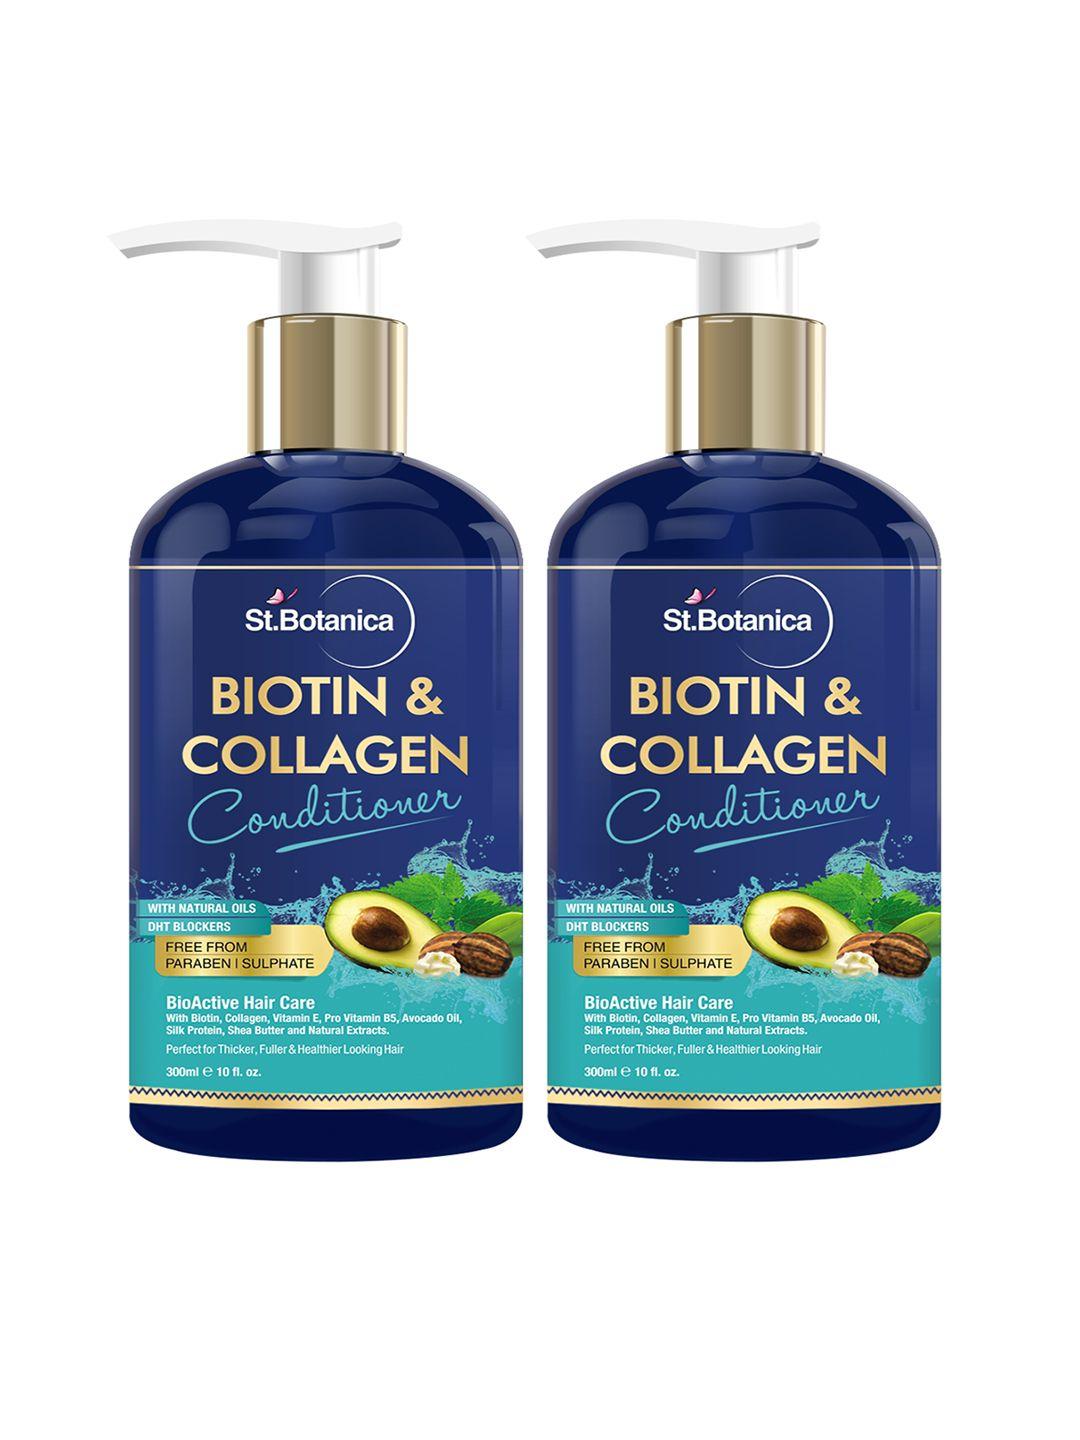 st.botanica set of 2 biotin & collagen hair conditioners